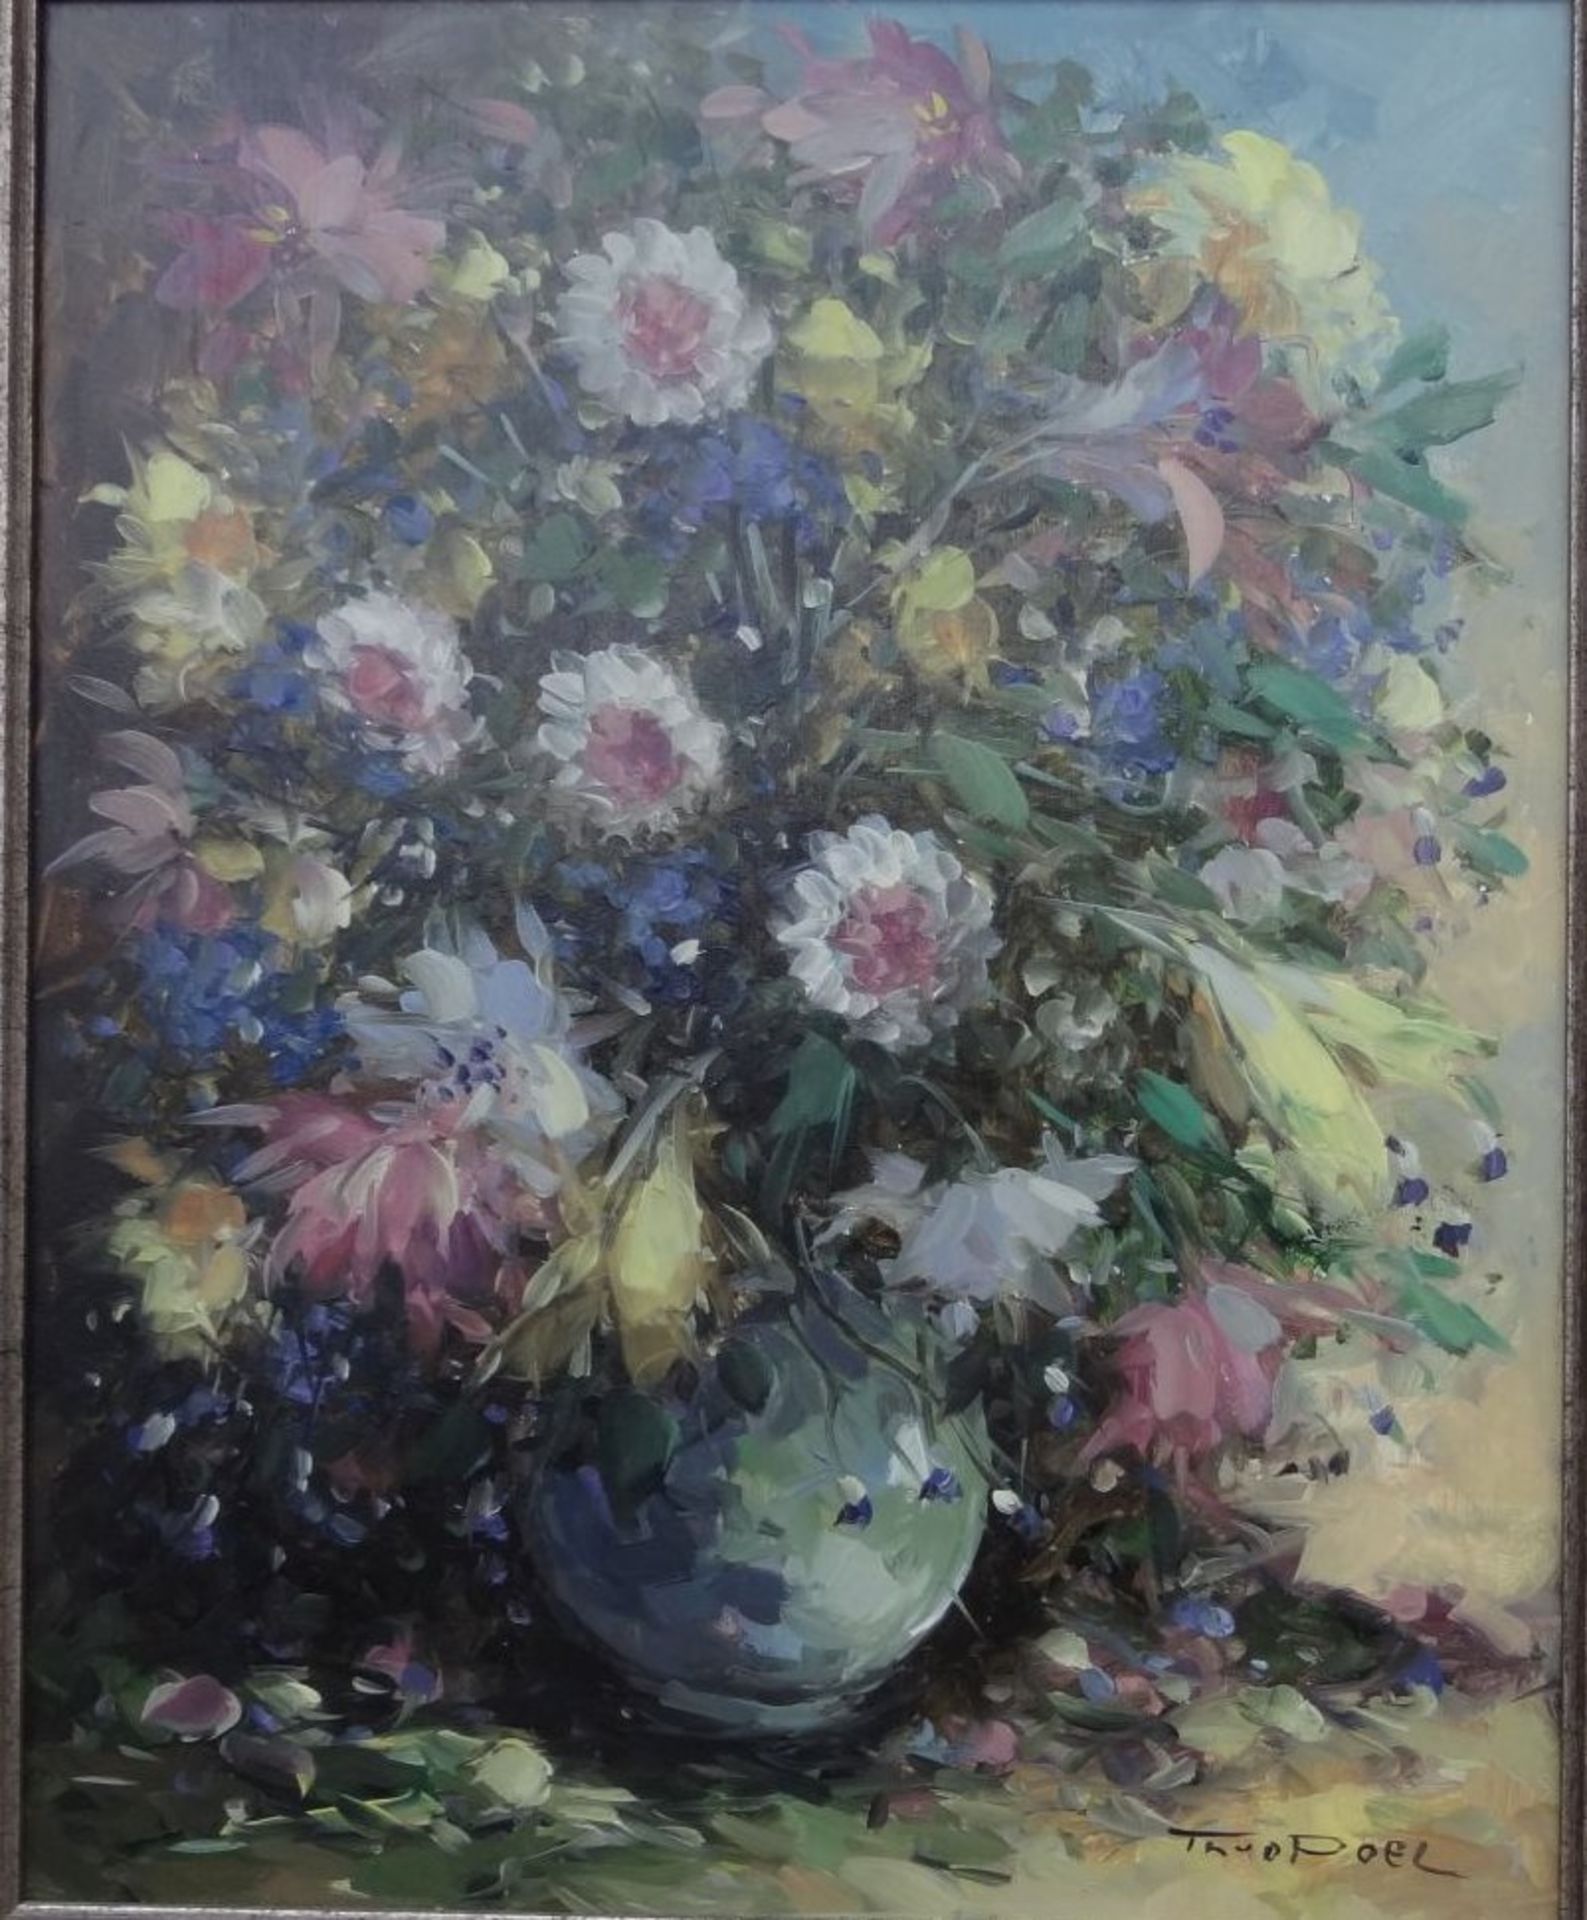 Theo VAN DER POEL (1951) "Blumen in Vase" Öl/Holz, gerahmt, RG 70x60 c- - -22.61 % buyer's premium